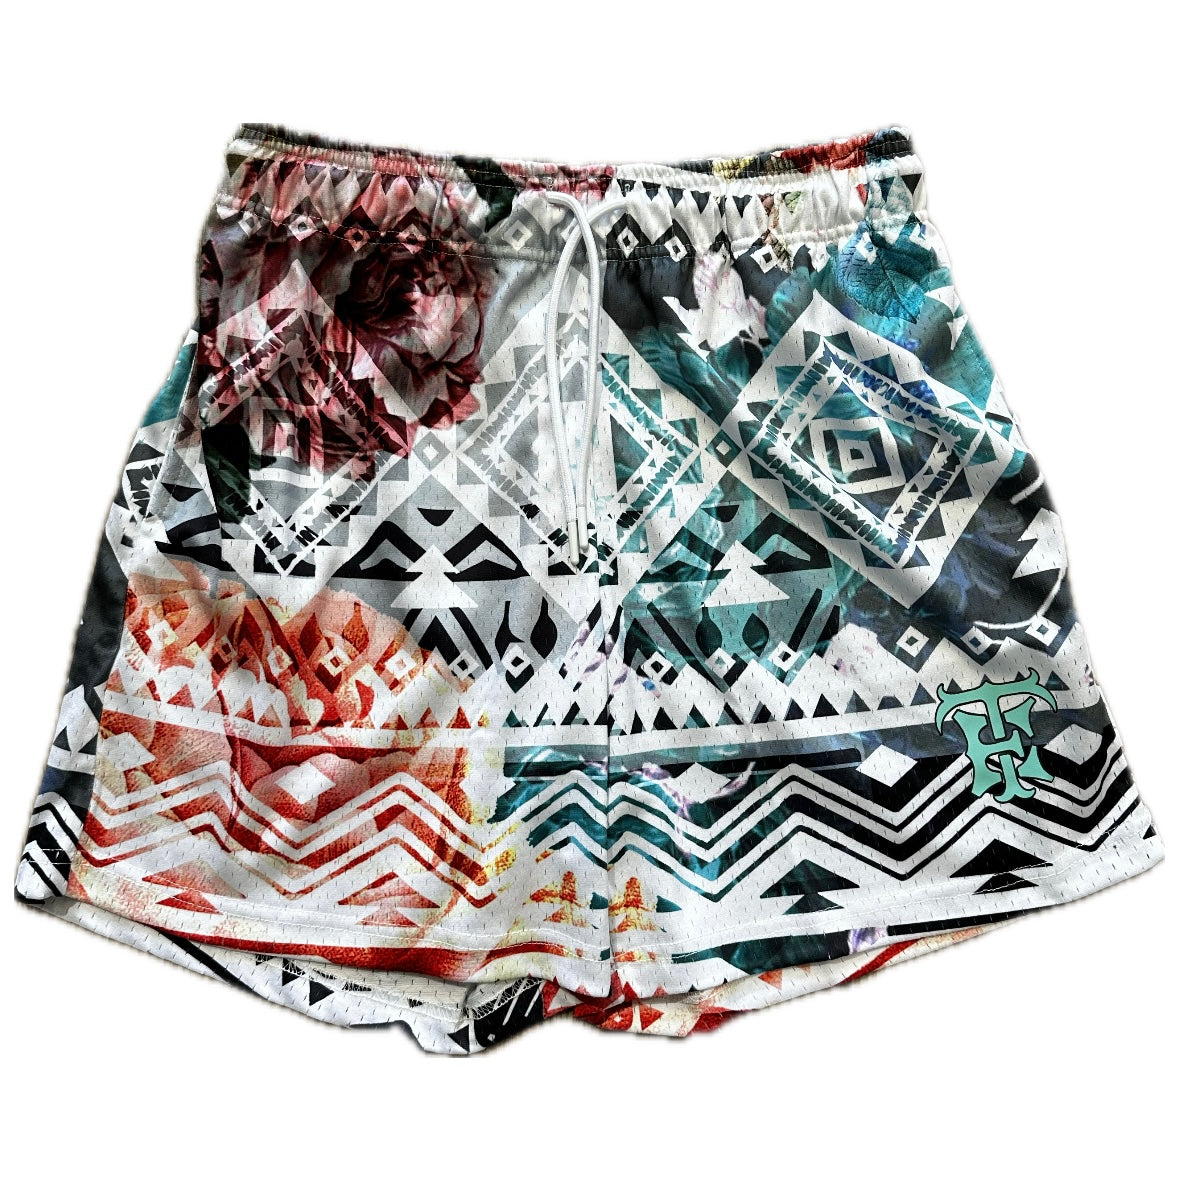 The Edition “Design” Shorts